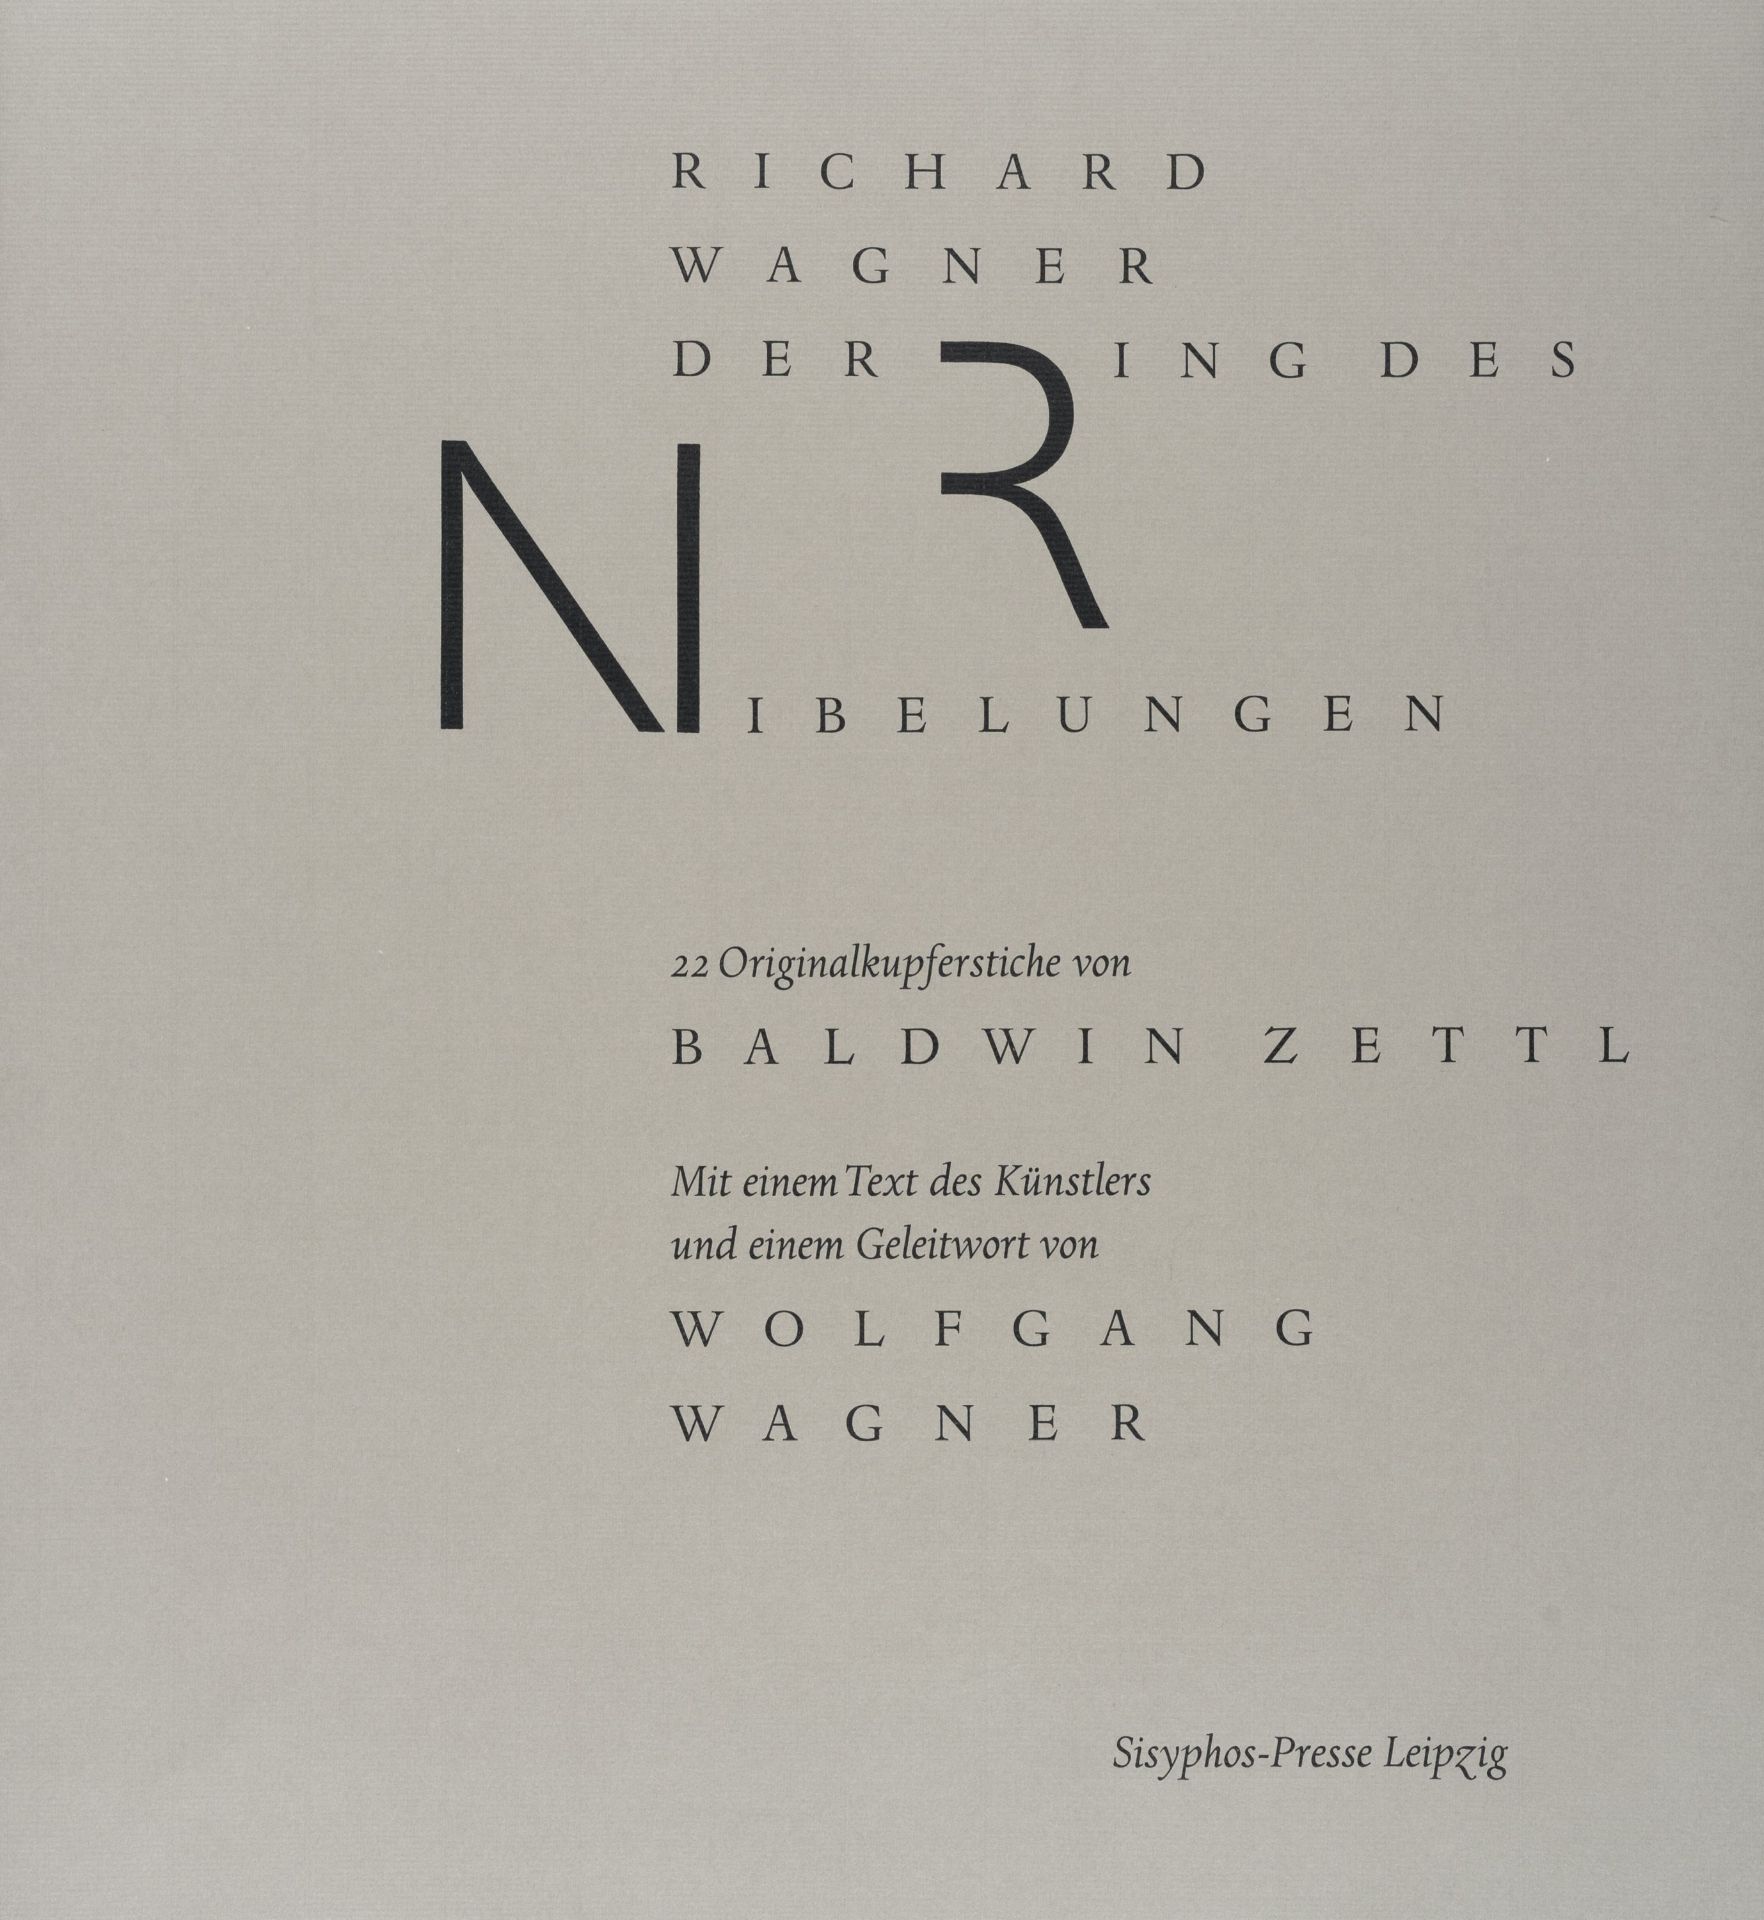 Baldwin Zettl "Der Ring des Nibelungen". 1991– 1998. - Image 2 of 26